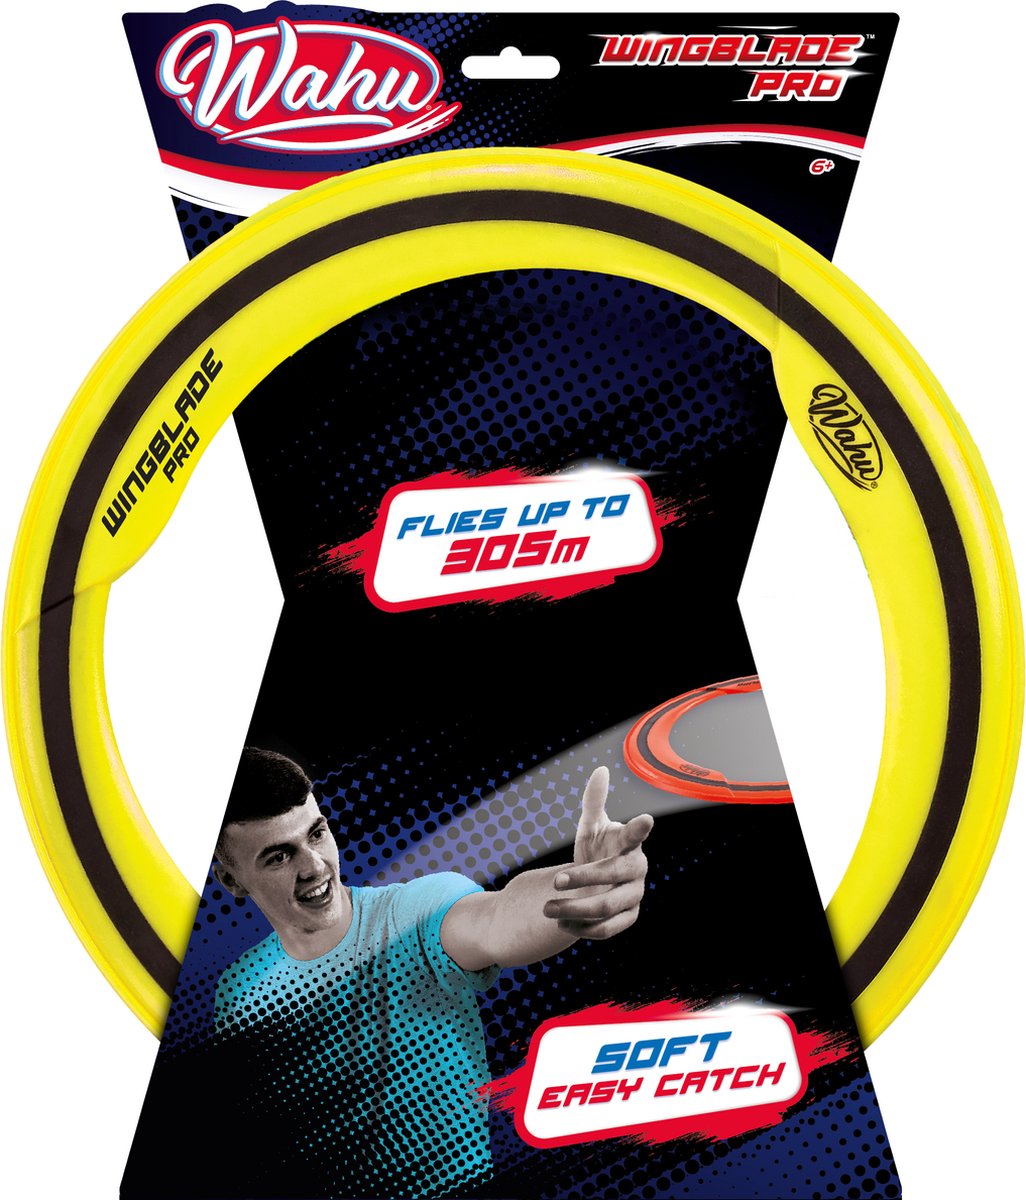 Wahu WingBlade Pro - Frisbee - Geel